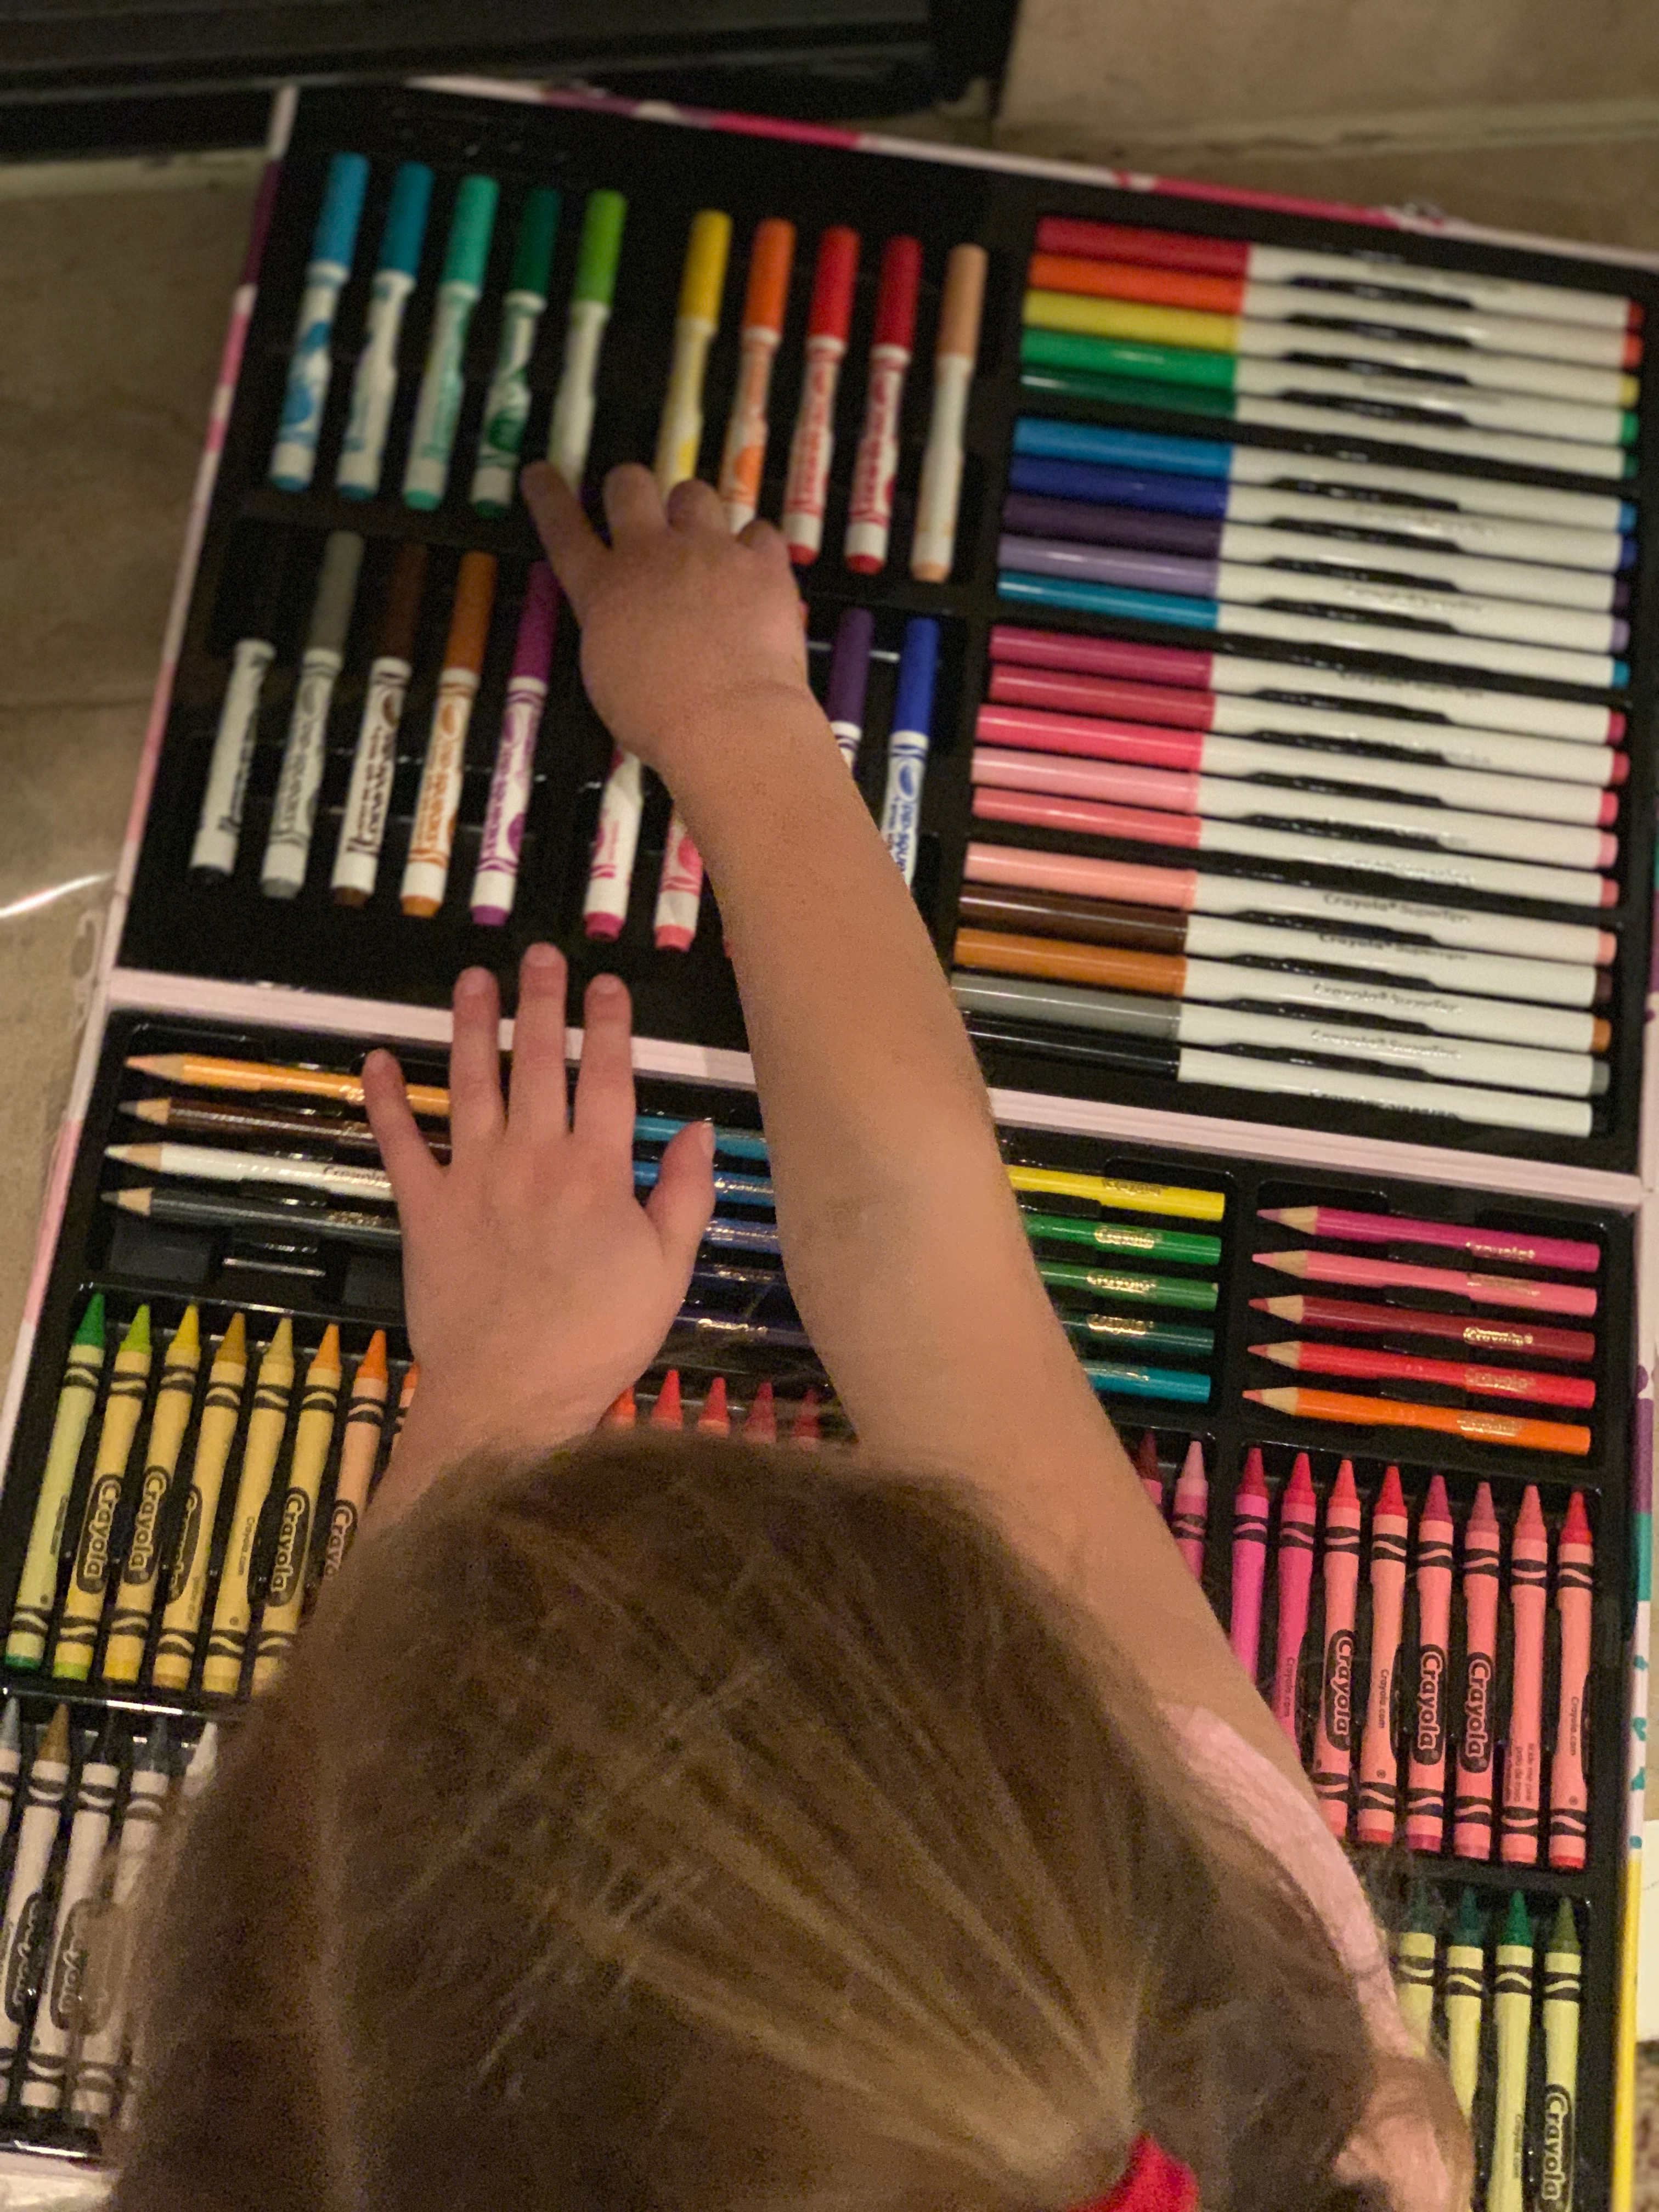 Crayola Inspiration Art Case Coloring Set Unboxing 